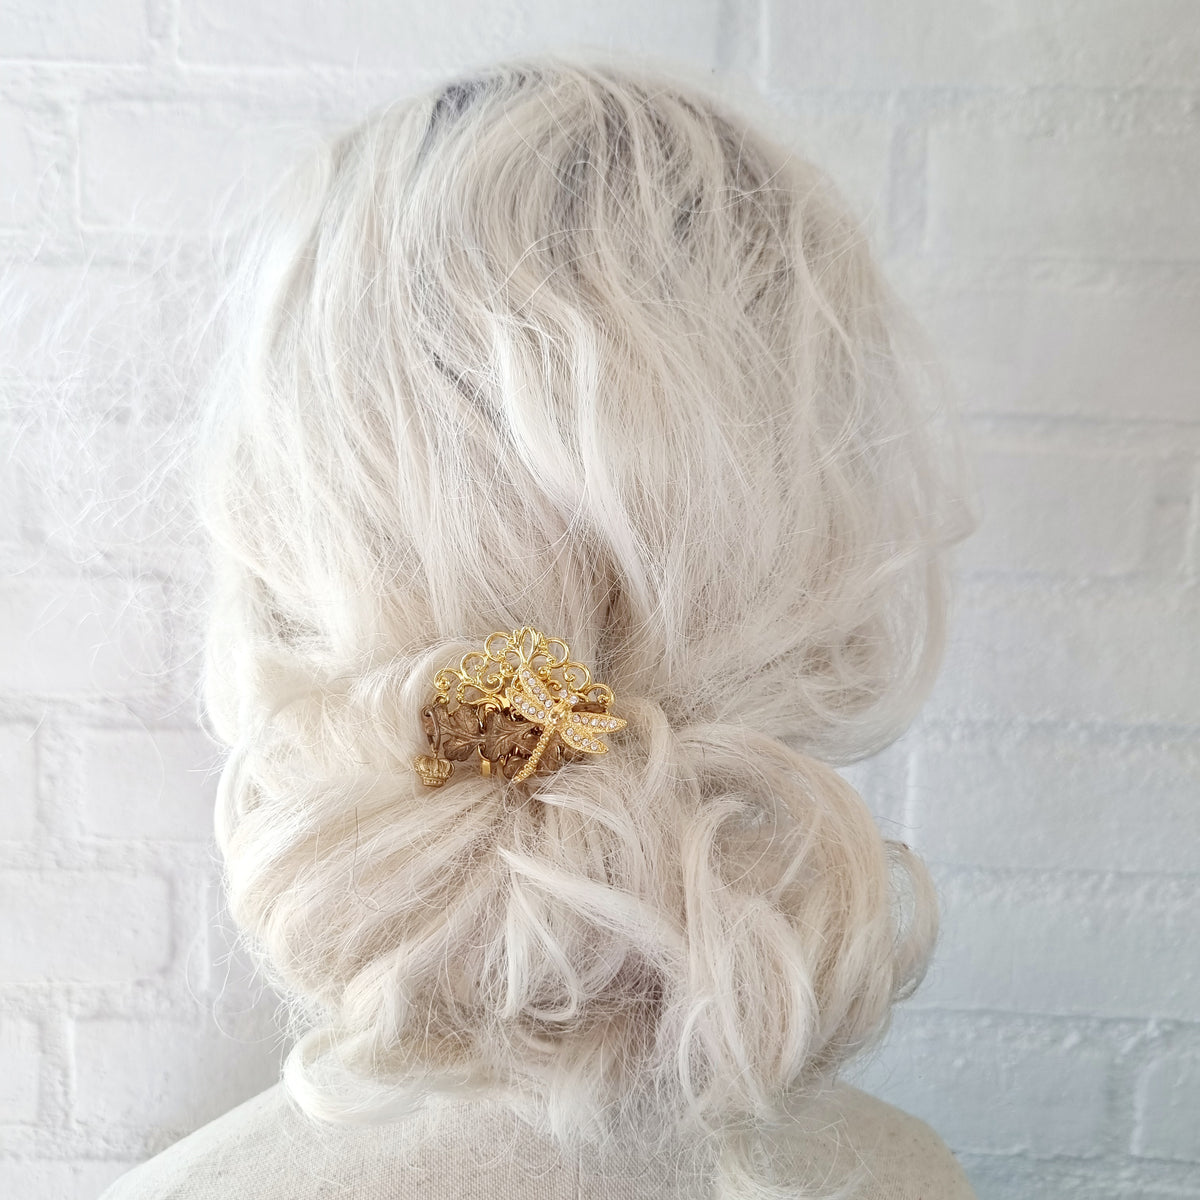 Den fineste hårnål i guld og diamanter - Hårpynt med blomster og perler til bryllup, konfirmation og fest